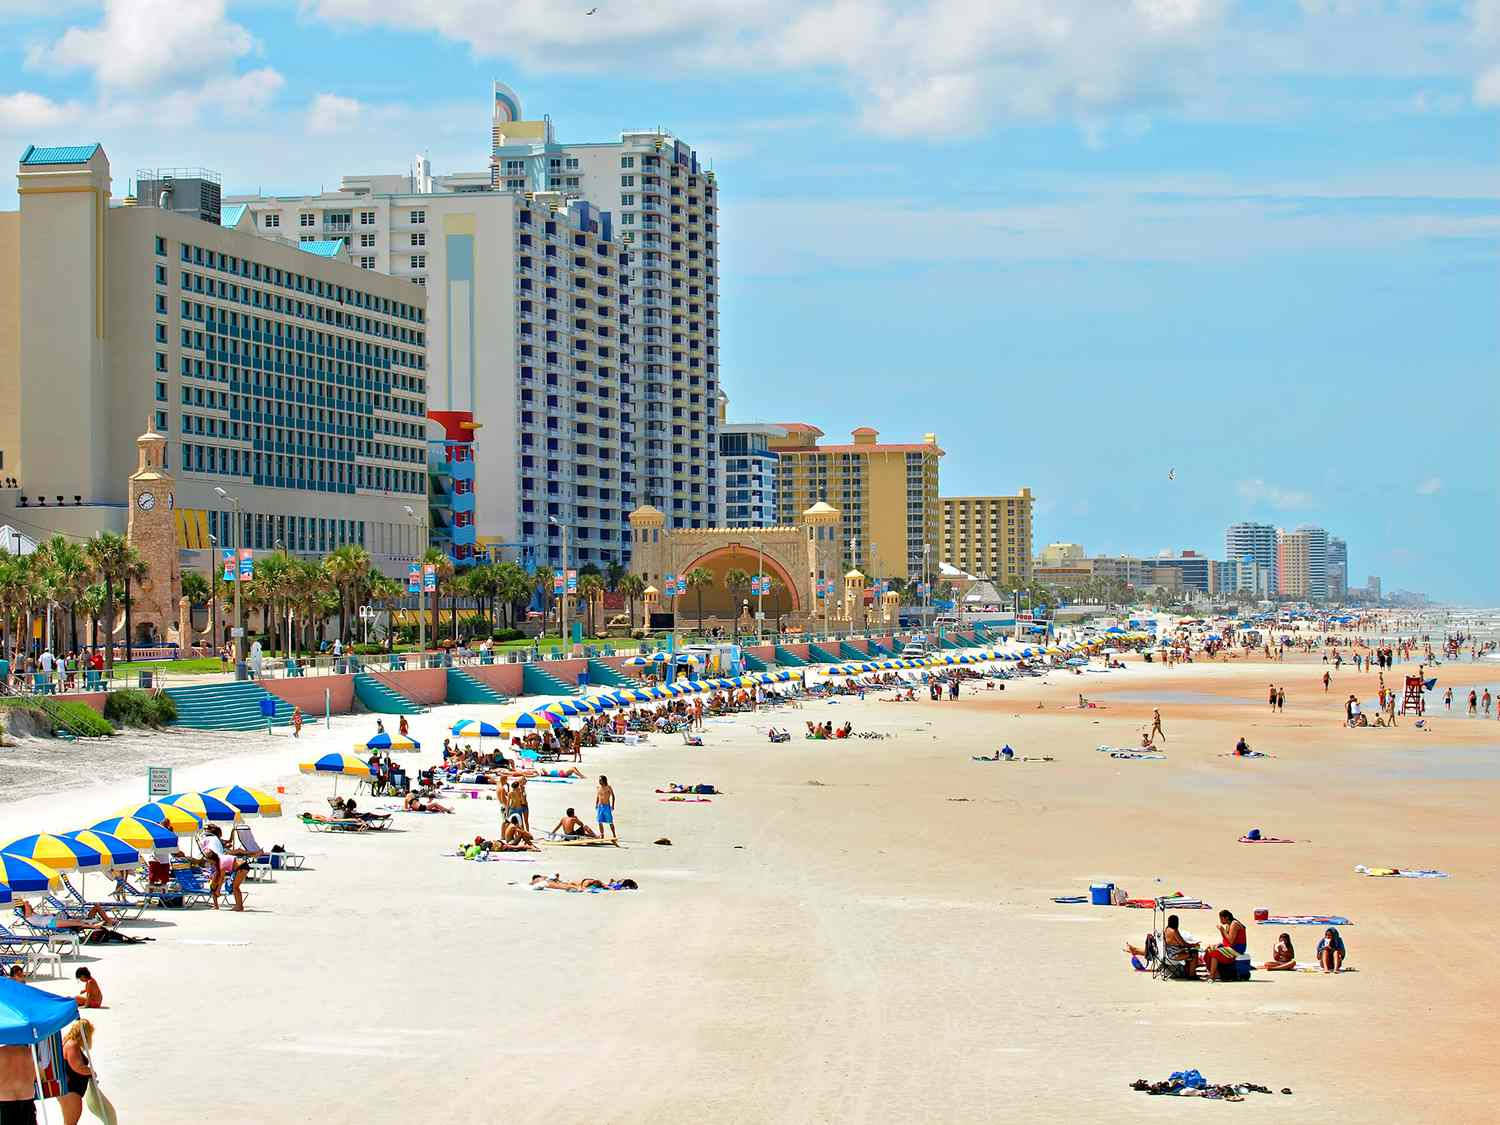 Florida Beach And Hotels Wallpaper